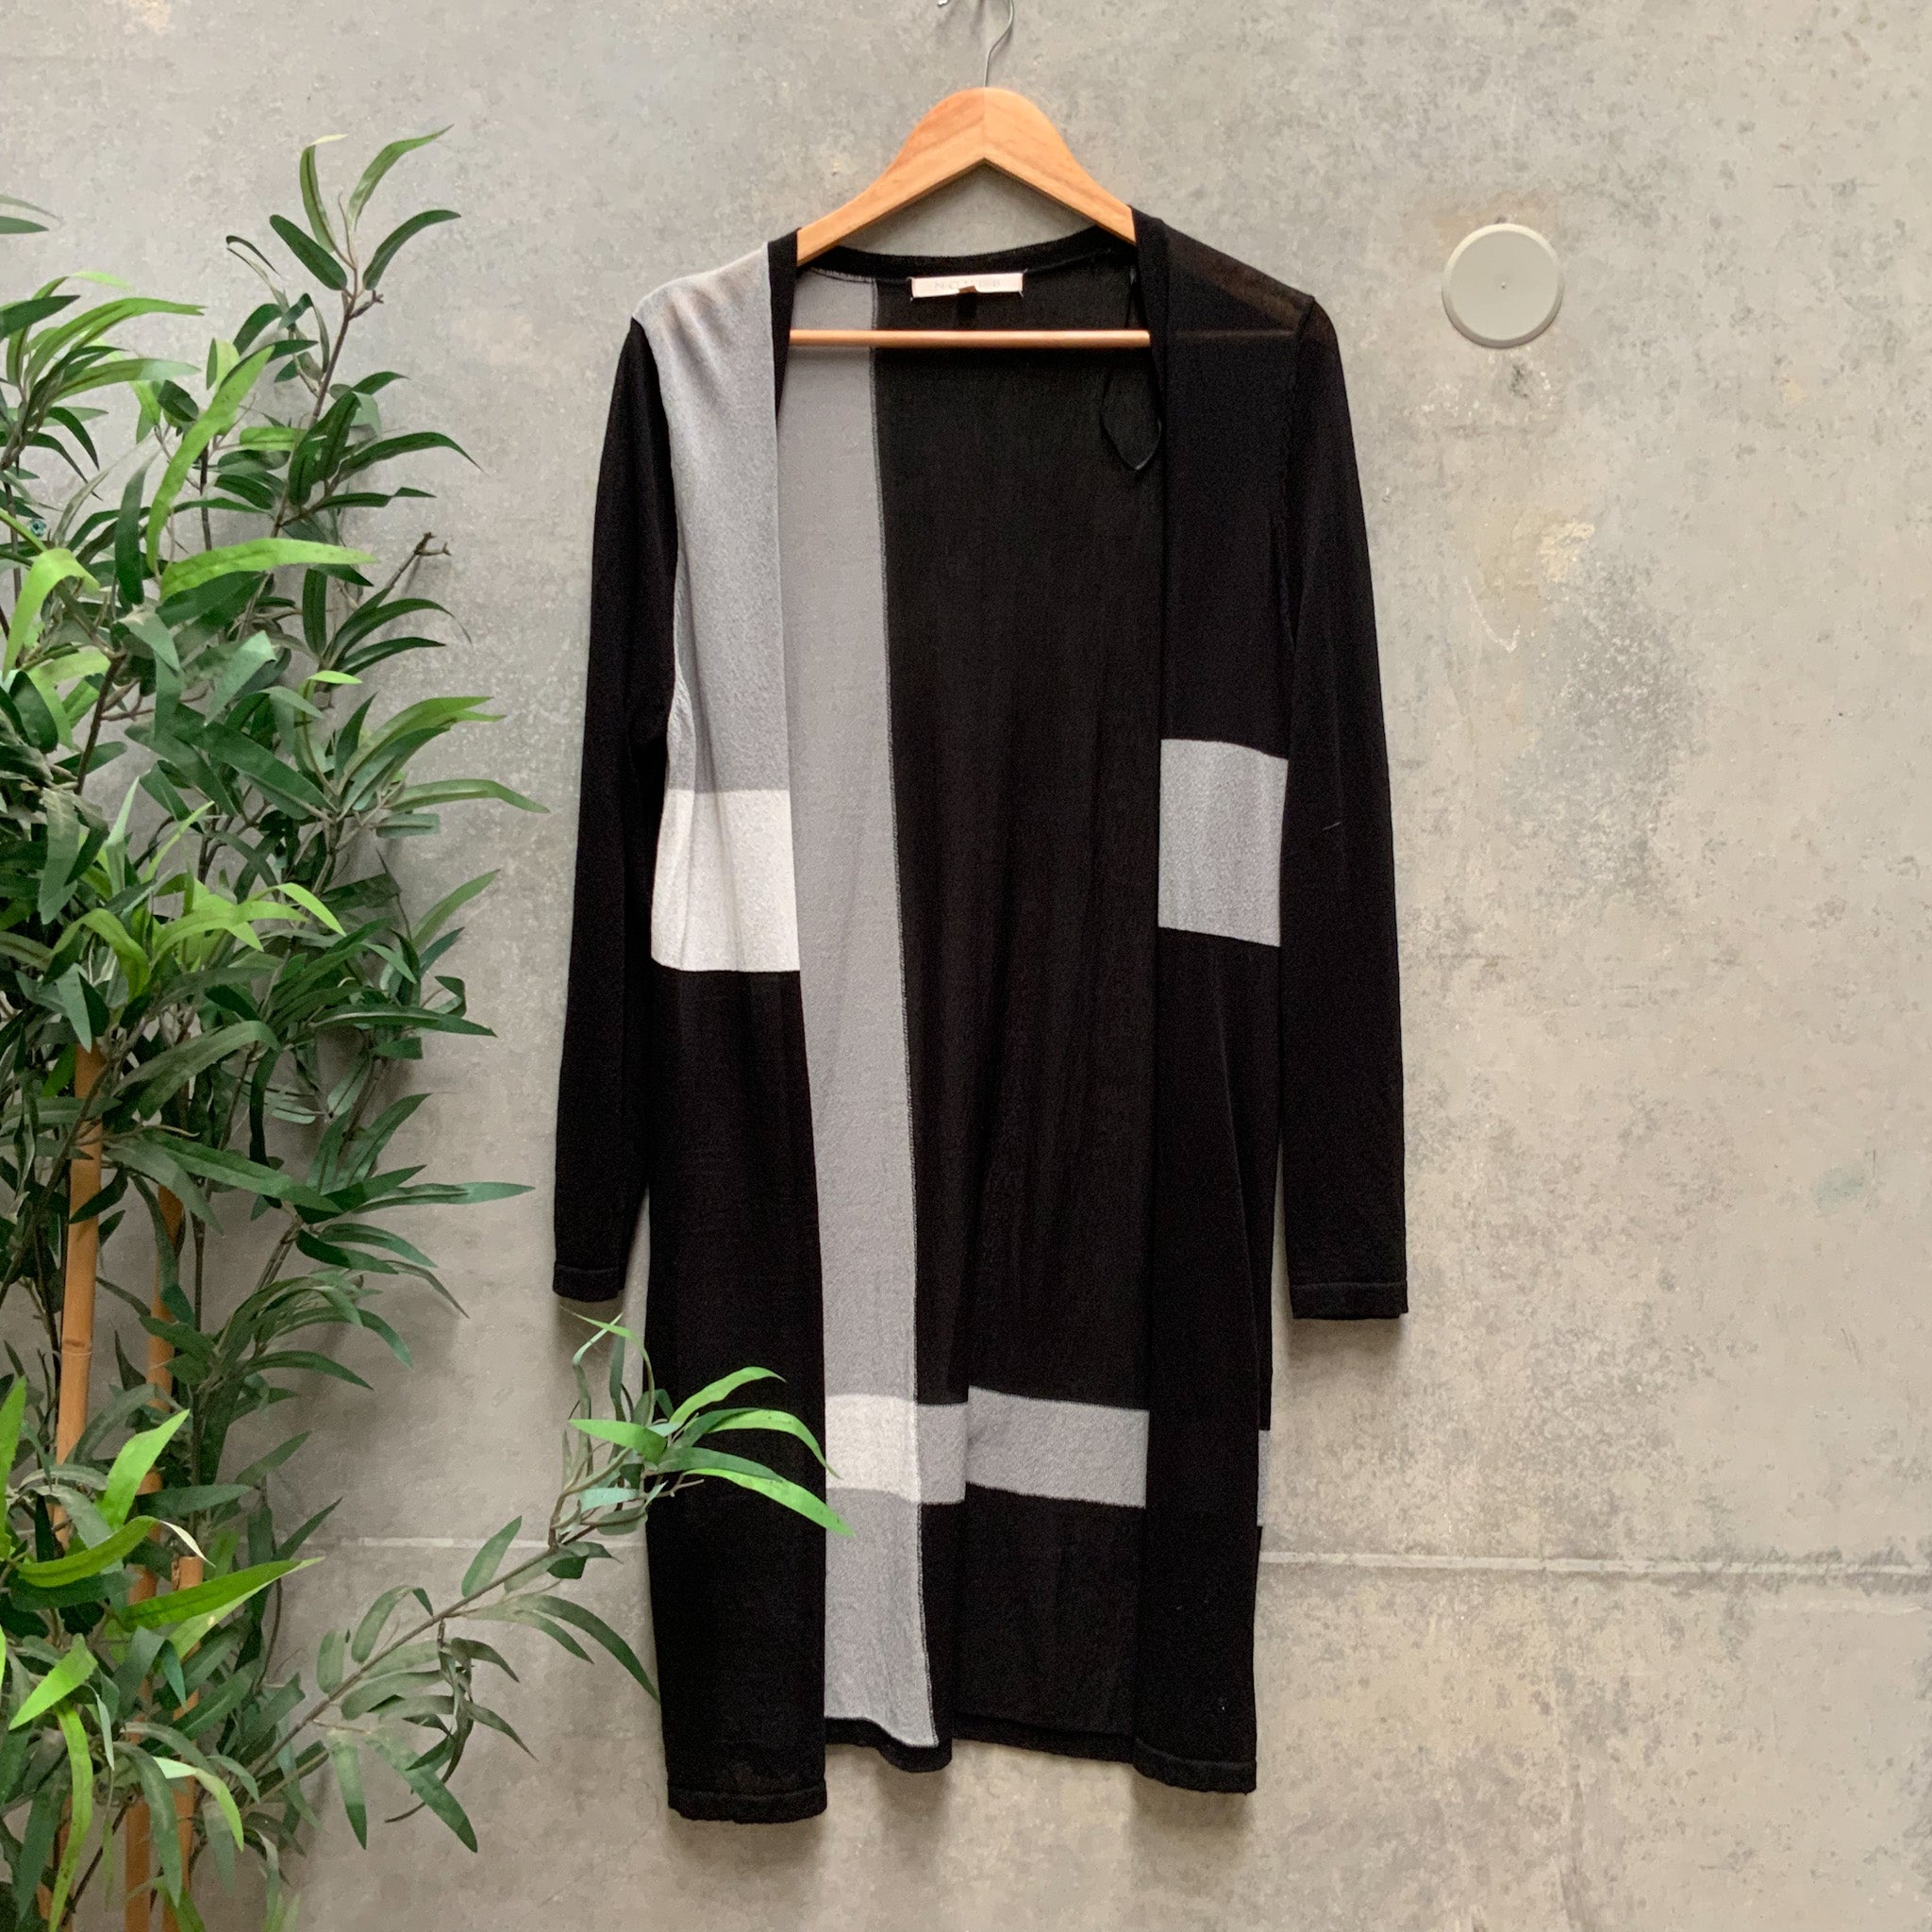 NONI B Ladies Black and Gray 2 Piece Longline Cardigan Set - Size XL